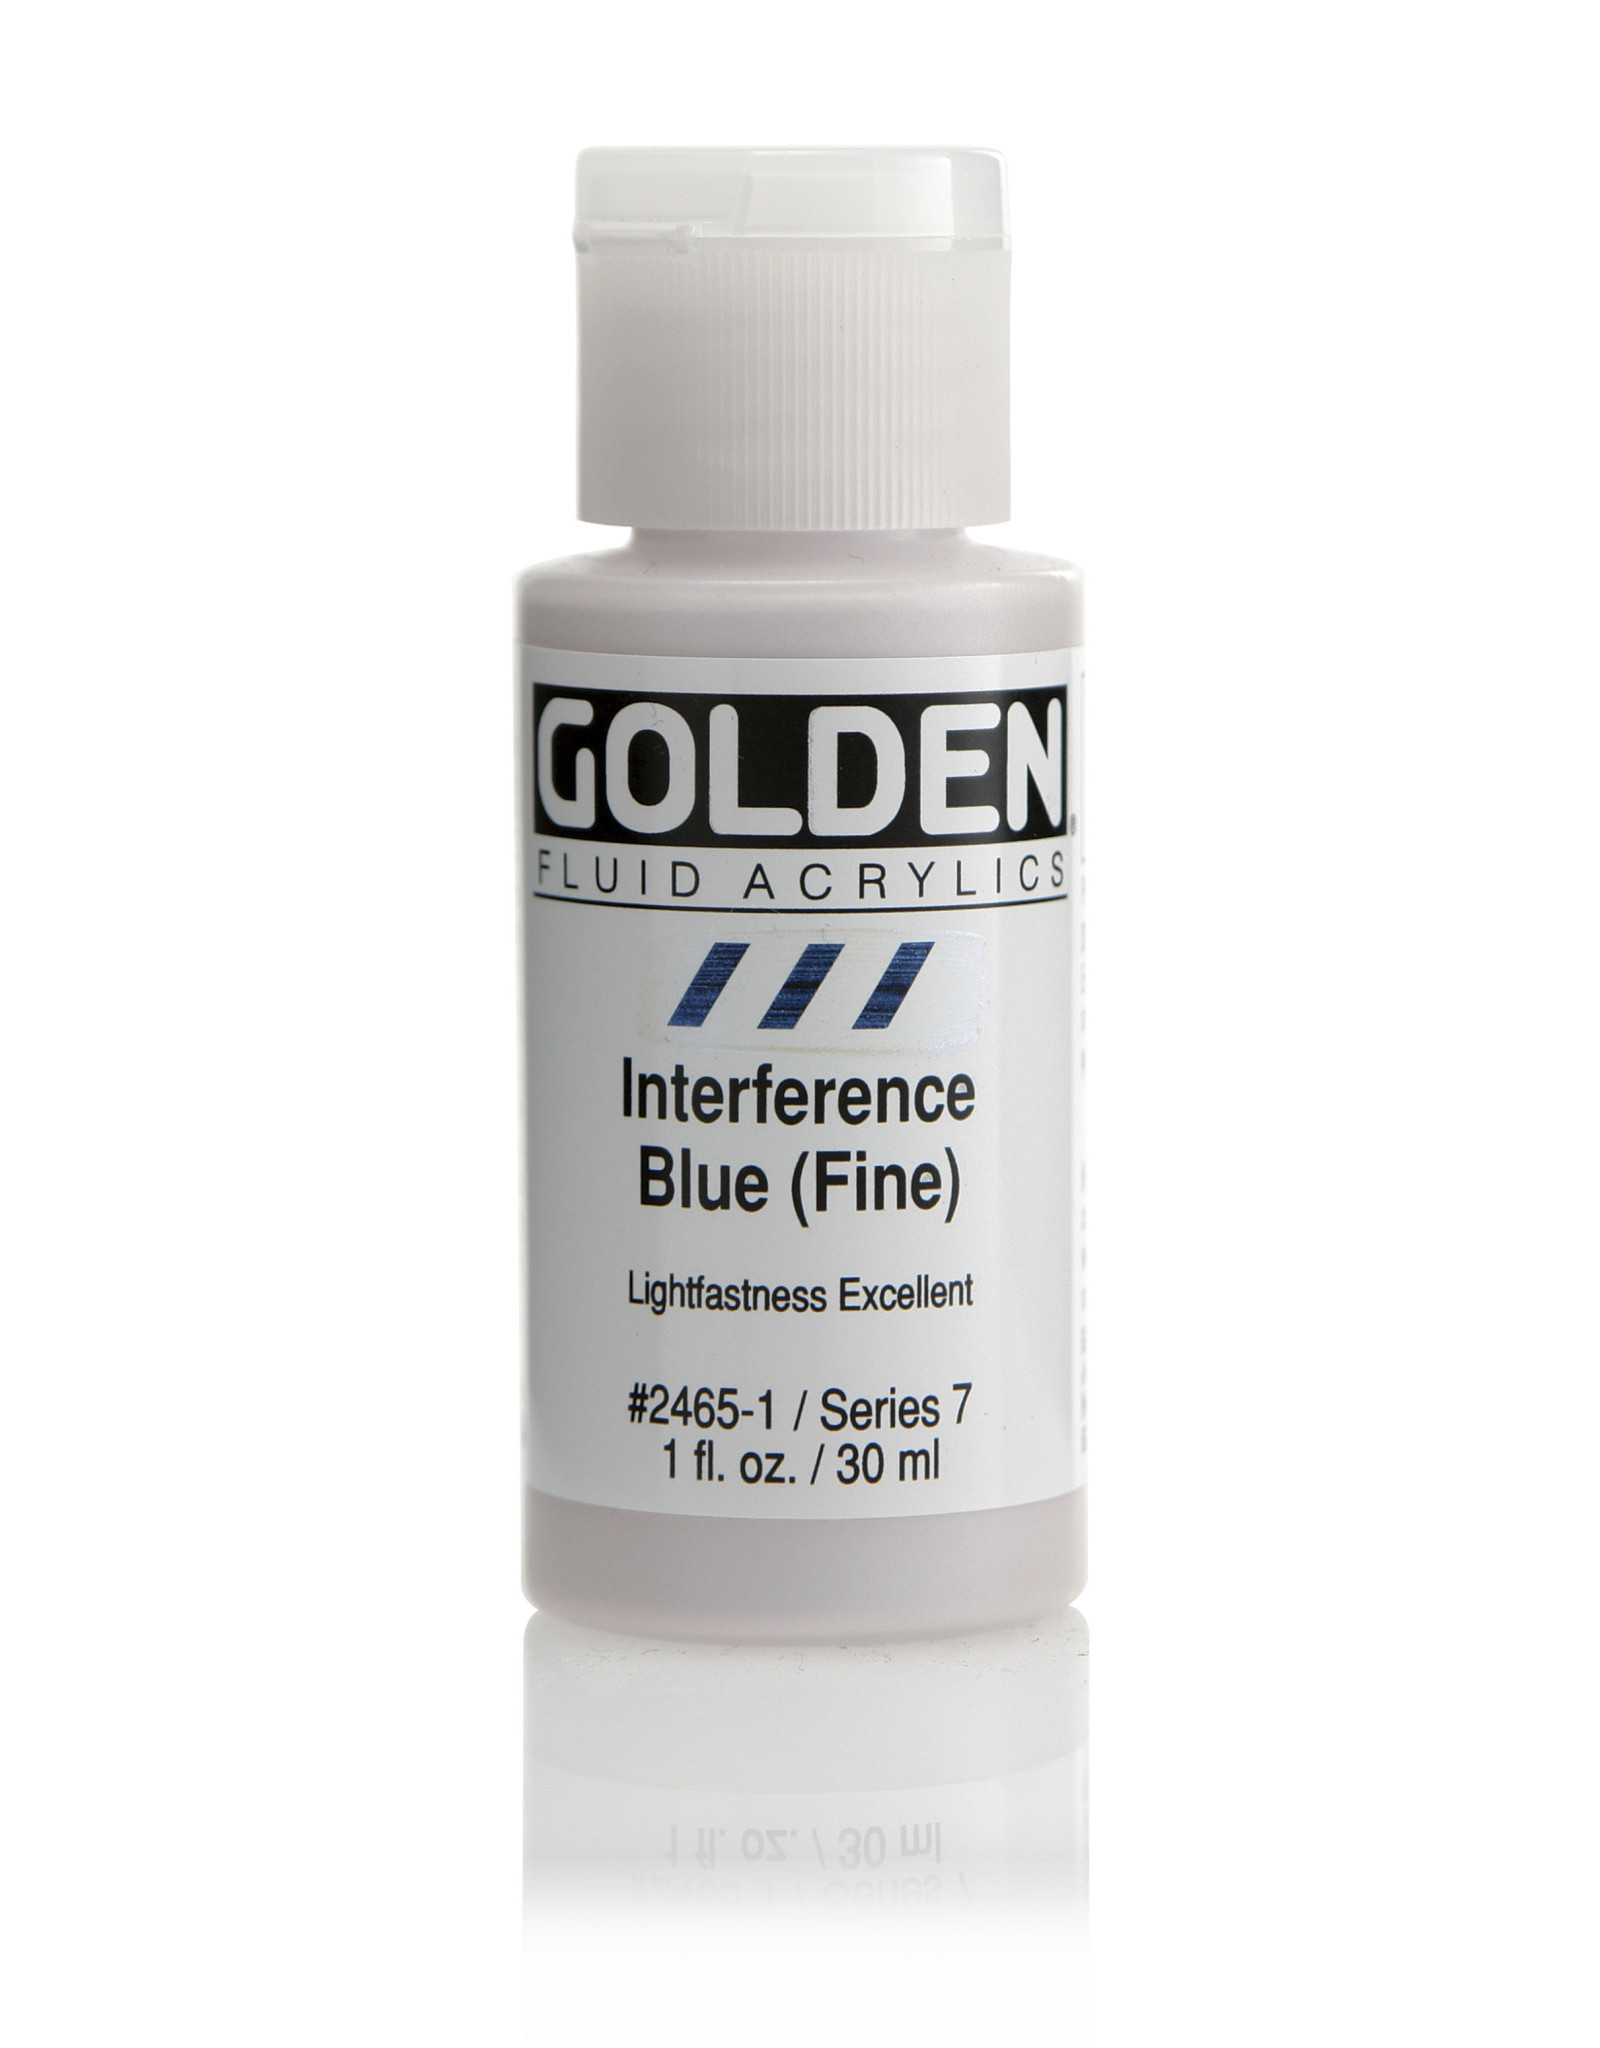 Golden Golden Fluid Acrylics, Interference Blue (Fine) 1oz Cylinder